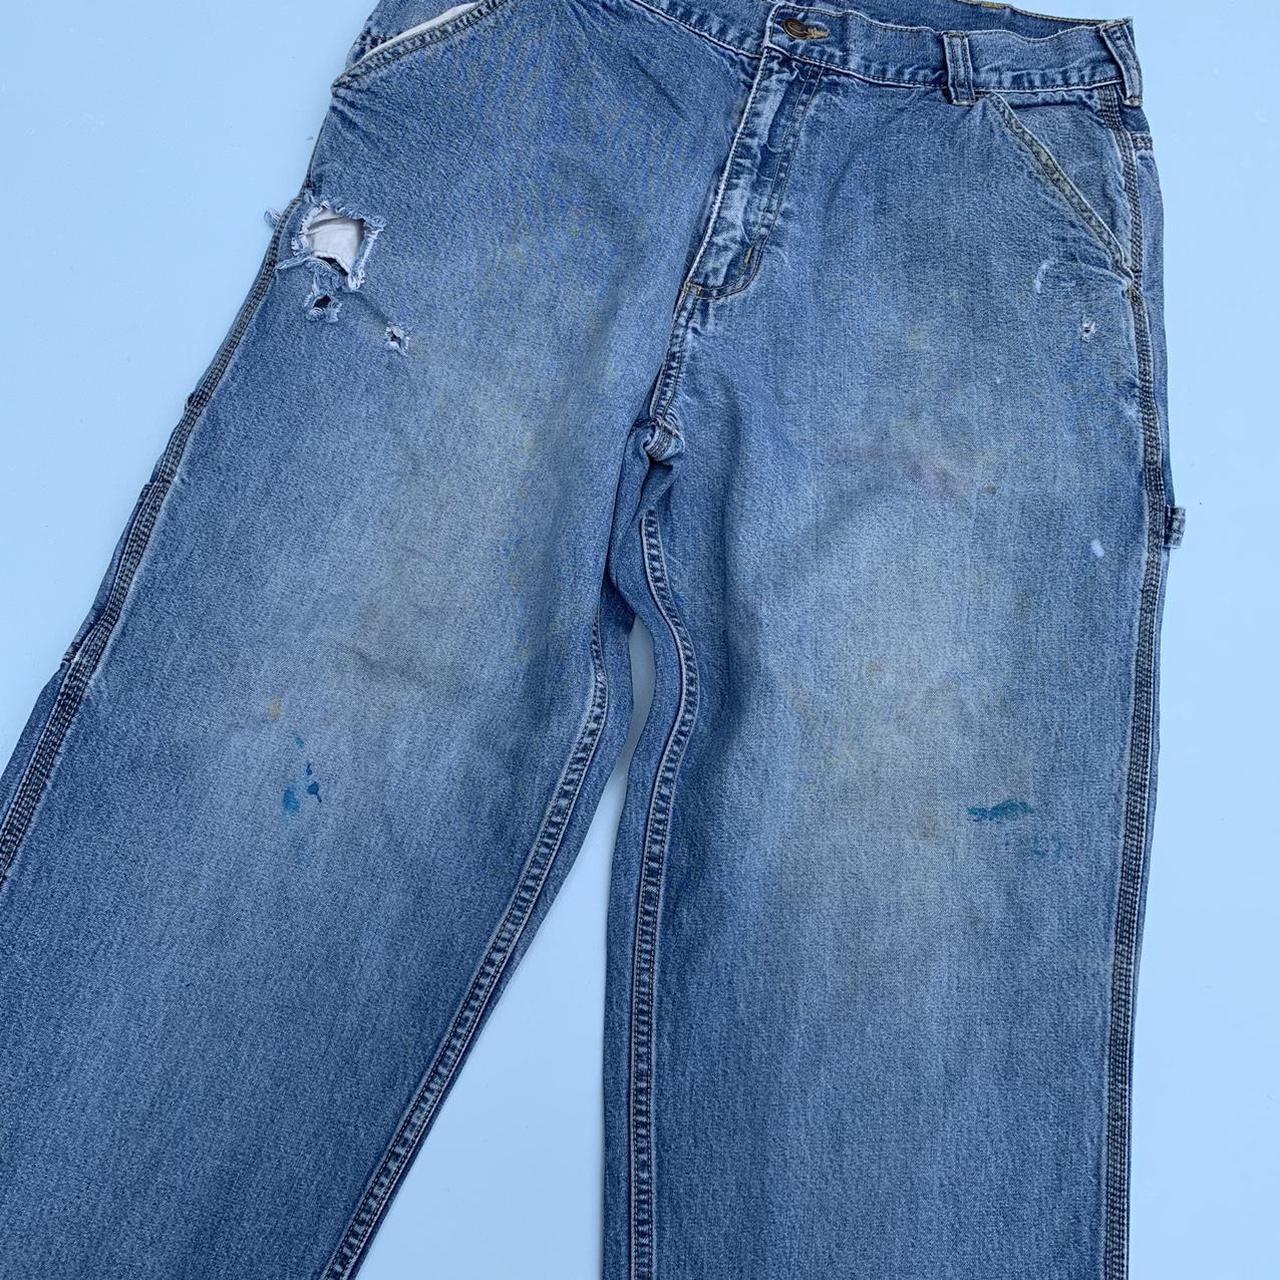 Distressed Carpenter Jeans - Open Trails 34x30 -... - Depop